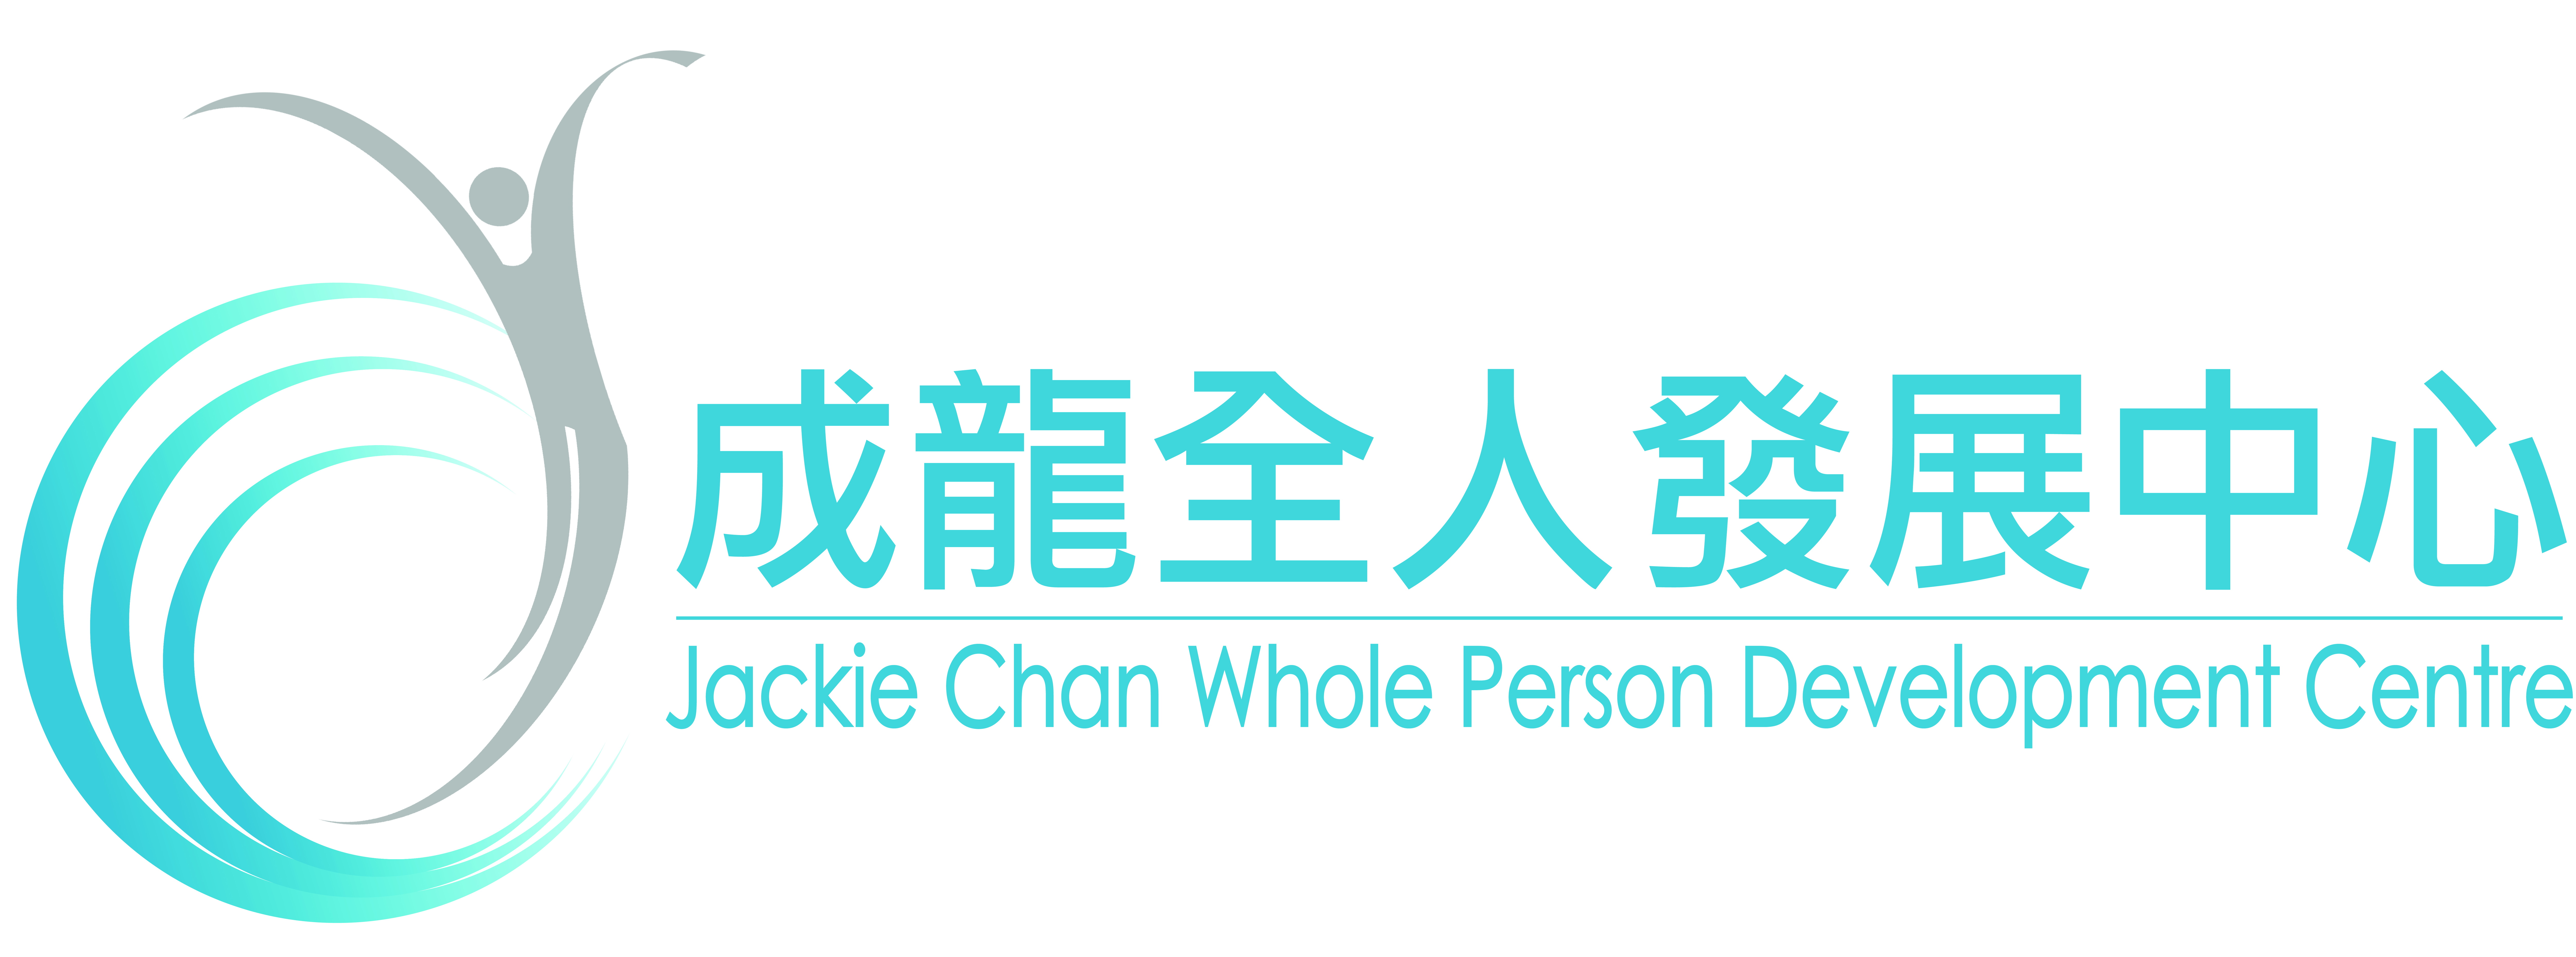 Jackie Chan Whole Person Development Centre Logo